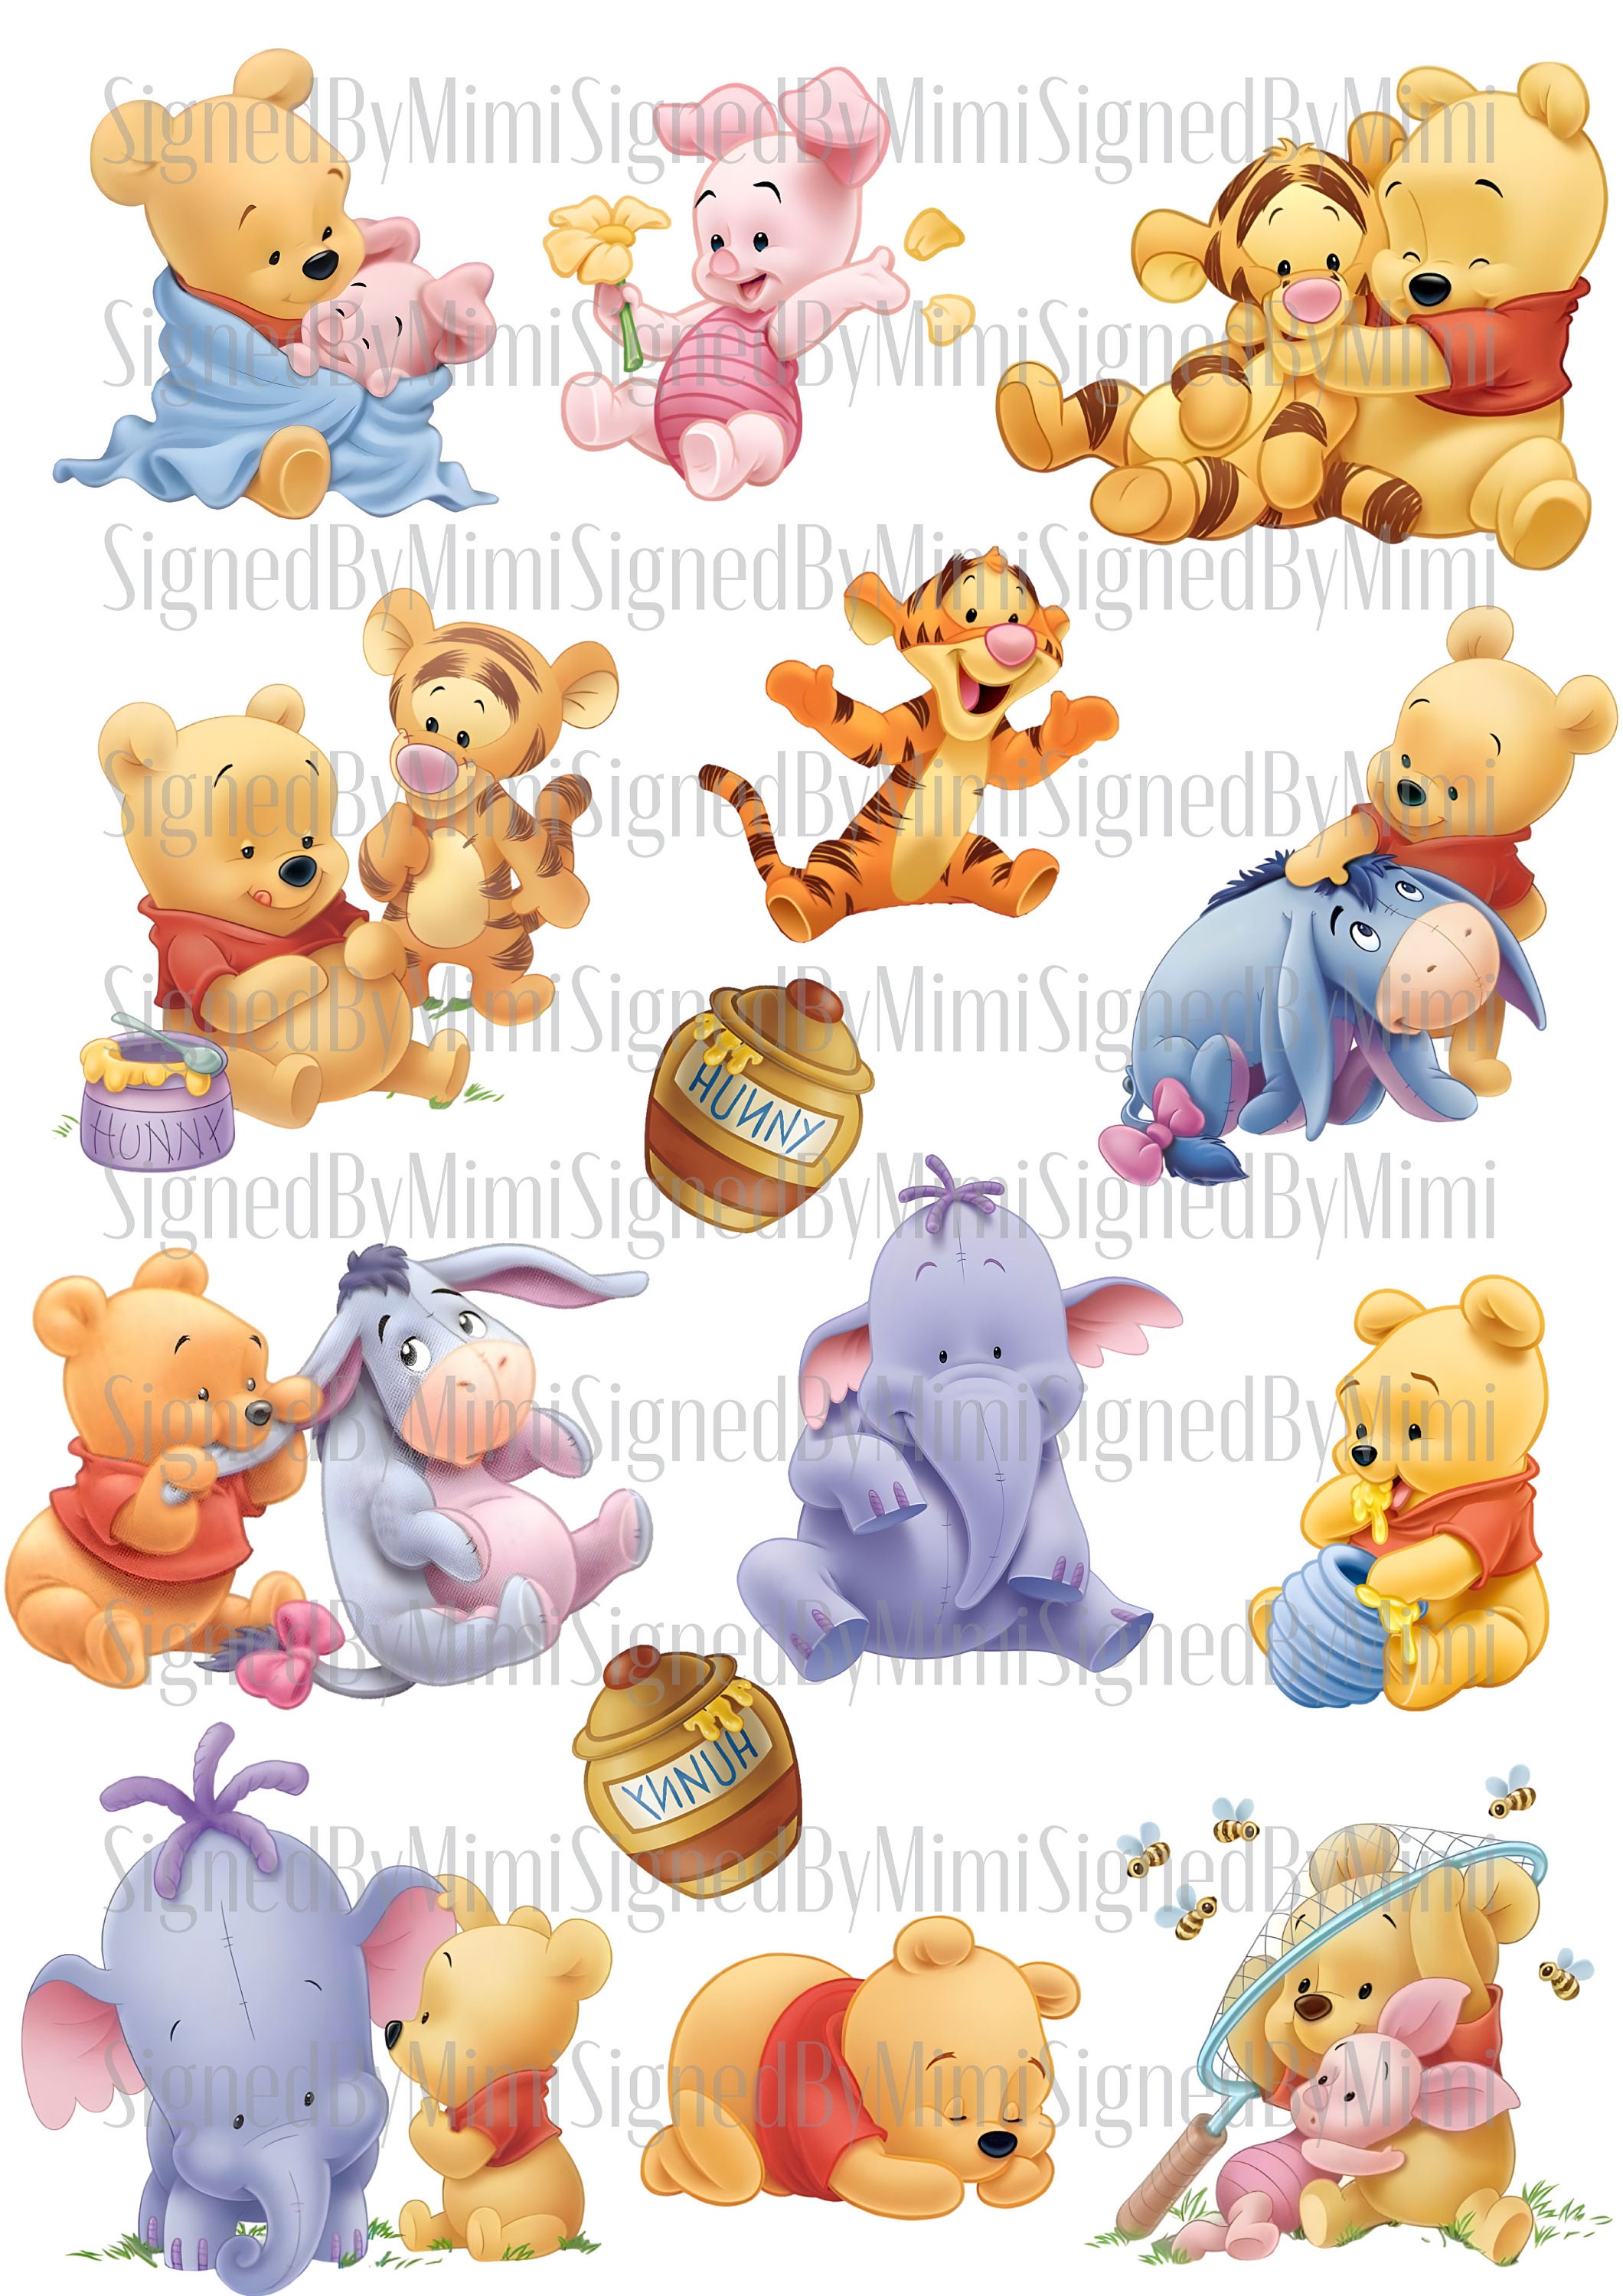 22 Adorable Winnie the Pooh Stickers, Kawaii Stickers, Journal Stickers USA